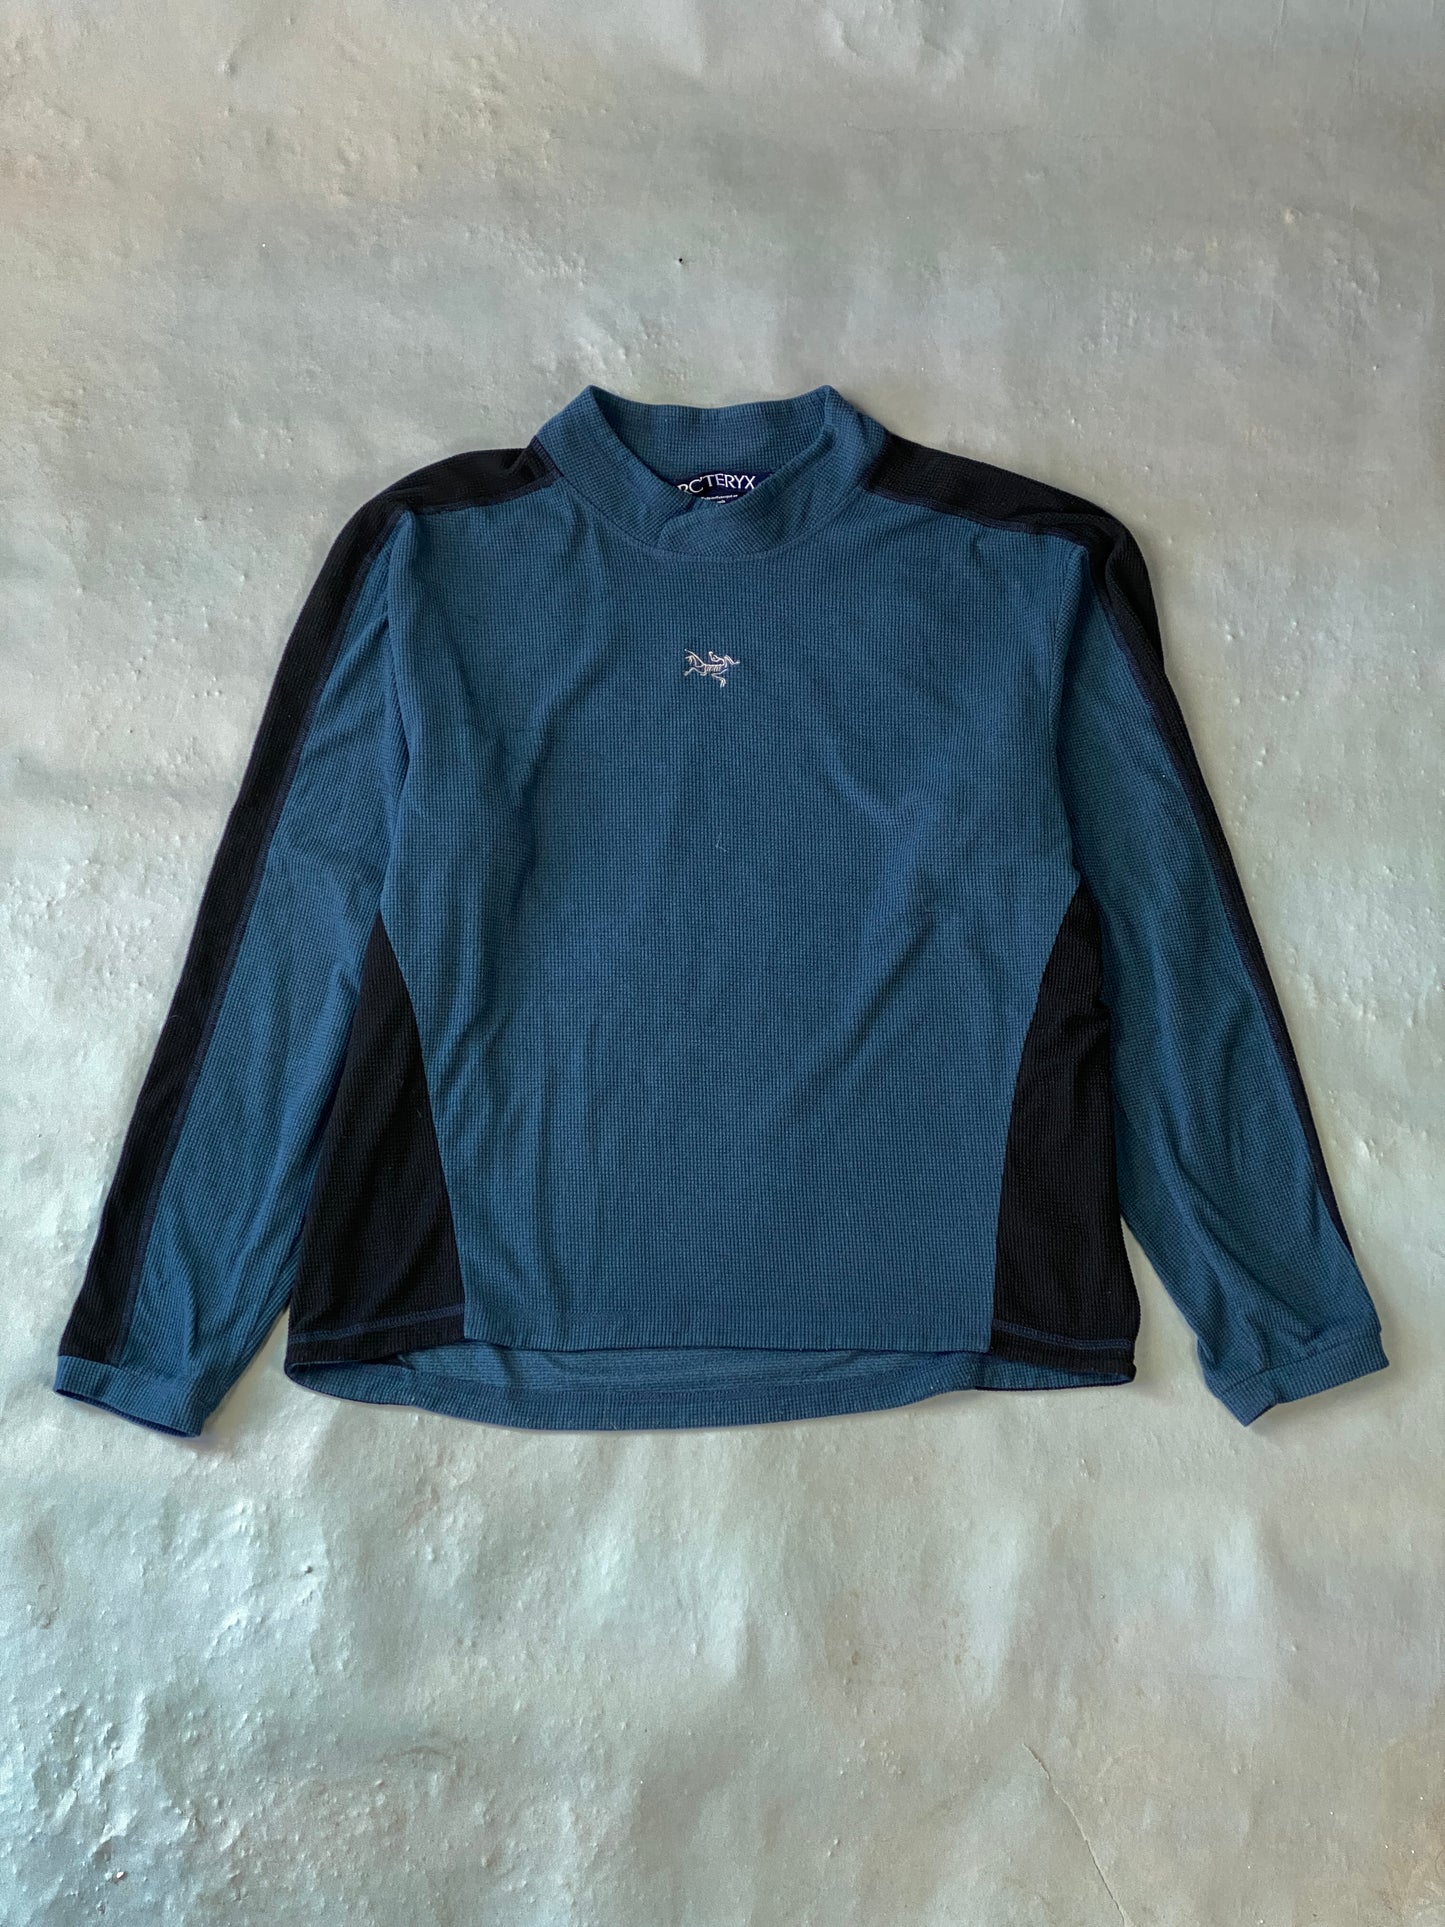 Arcteryx Center Logo Vintage Fleece Sweatshirt